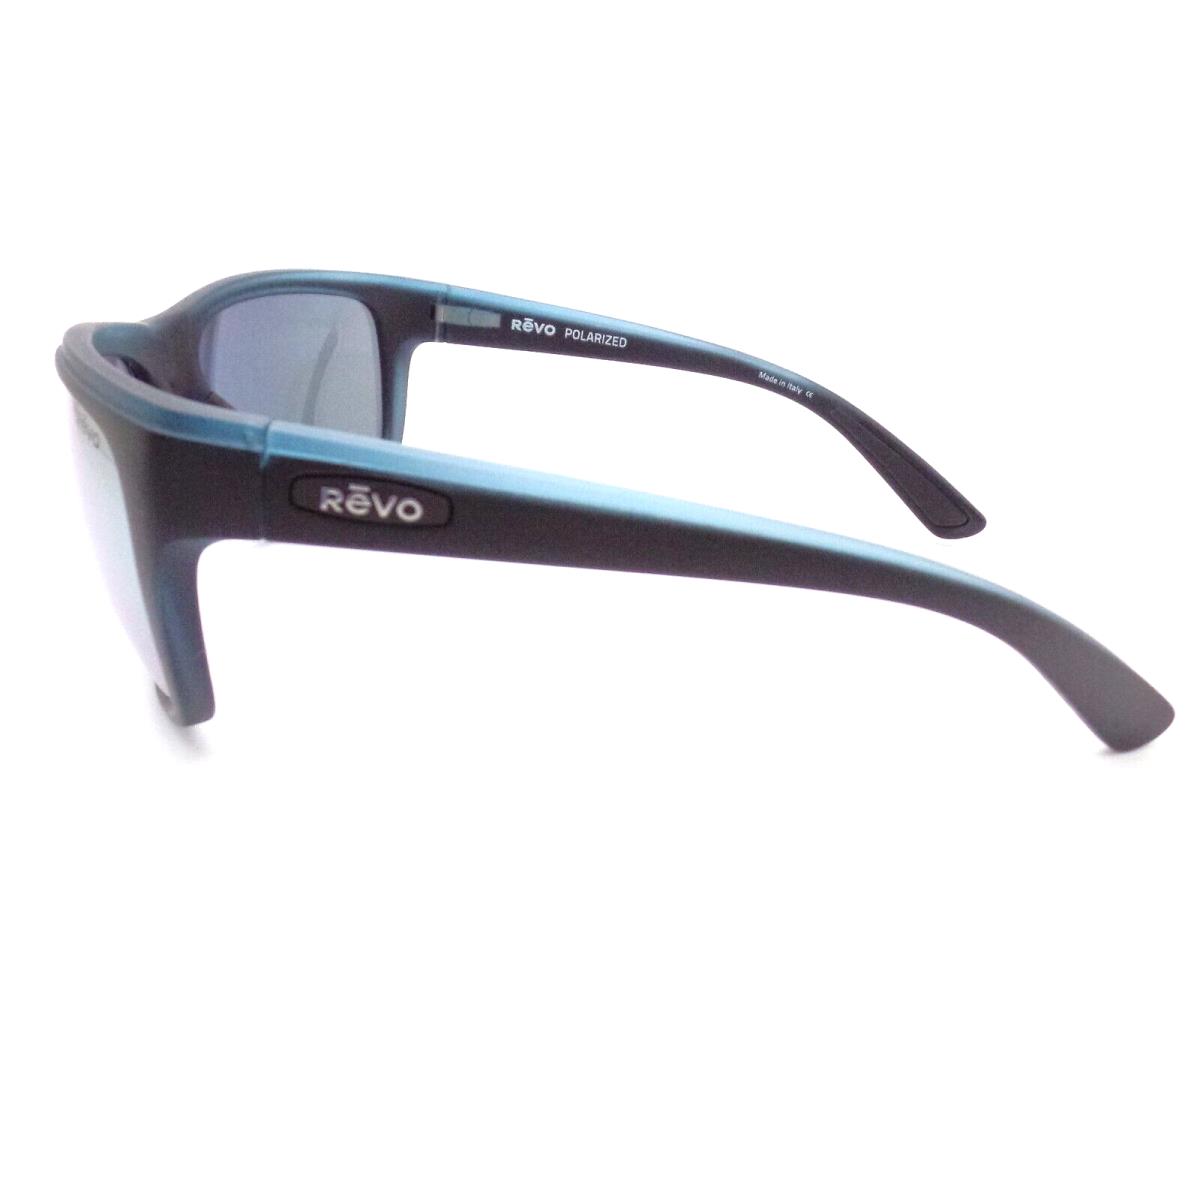 Revo sunglasses  - Matte Black Grey Frame 2